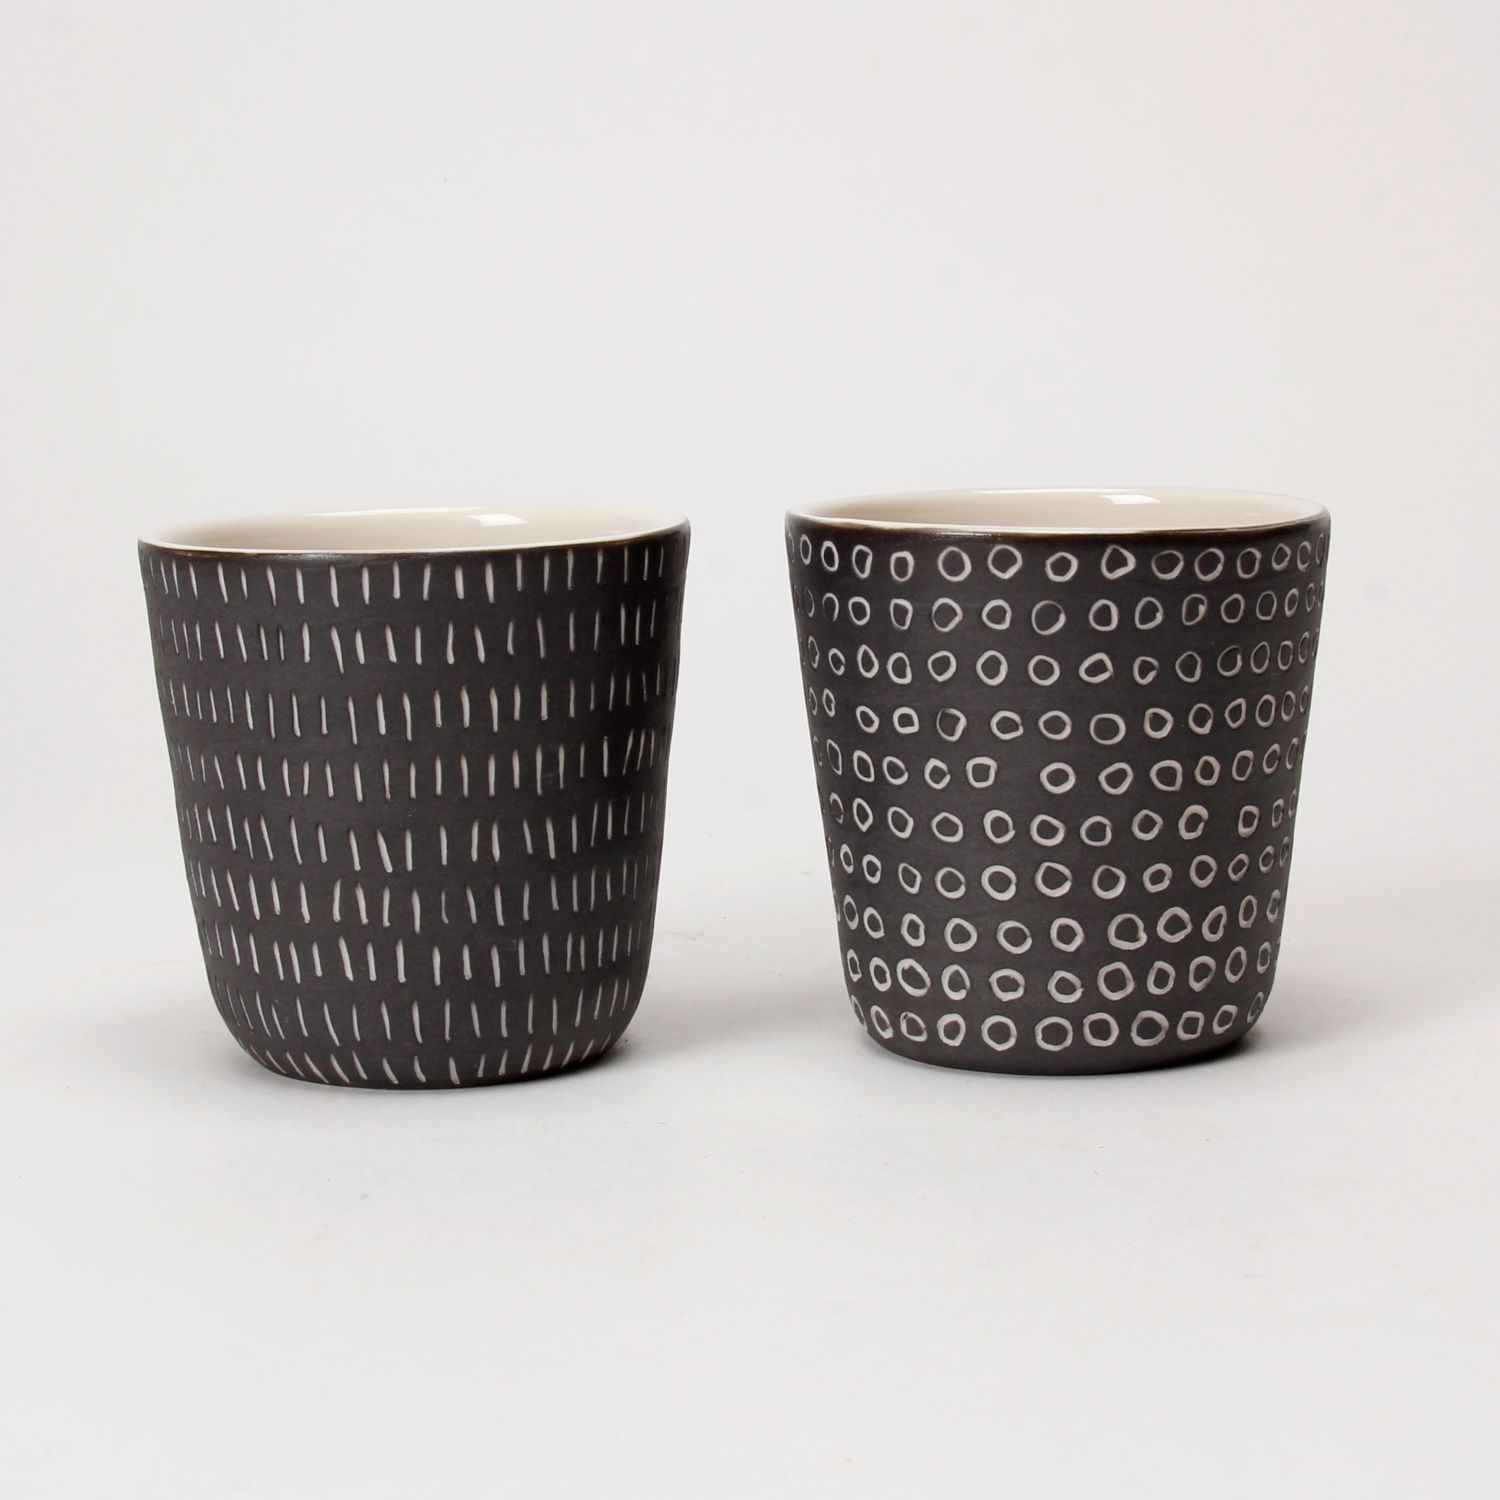 Cuir Ceramics: Black and White Tumbler Product Image 4 of 4